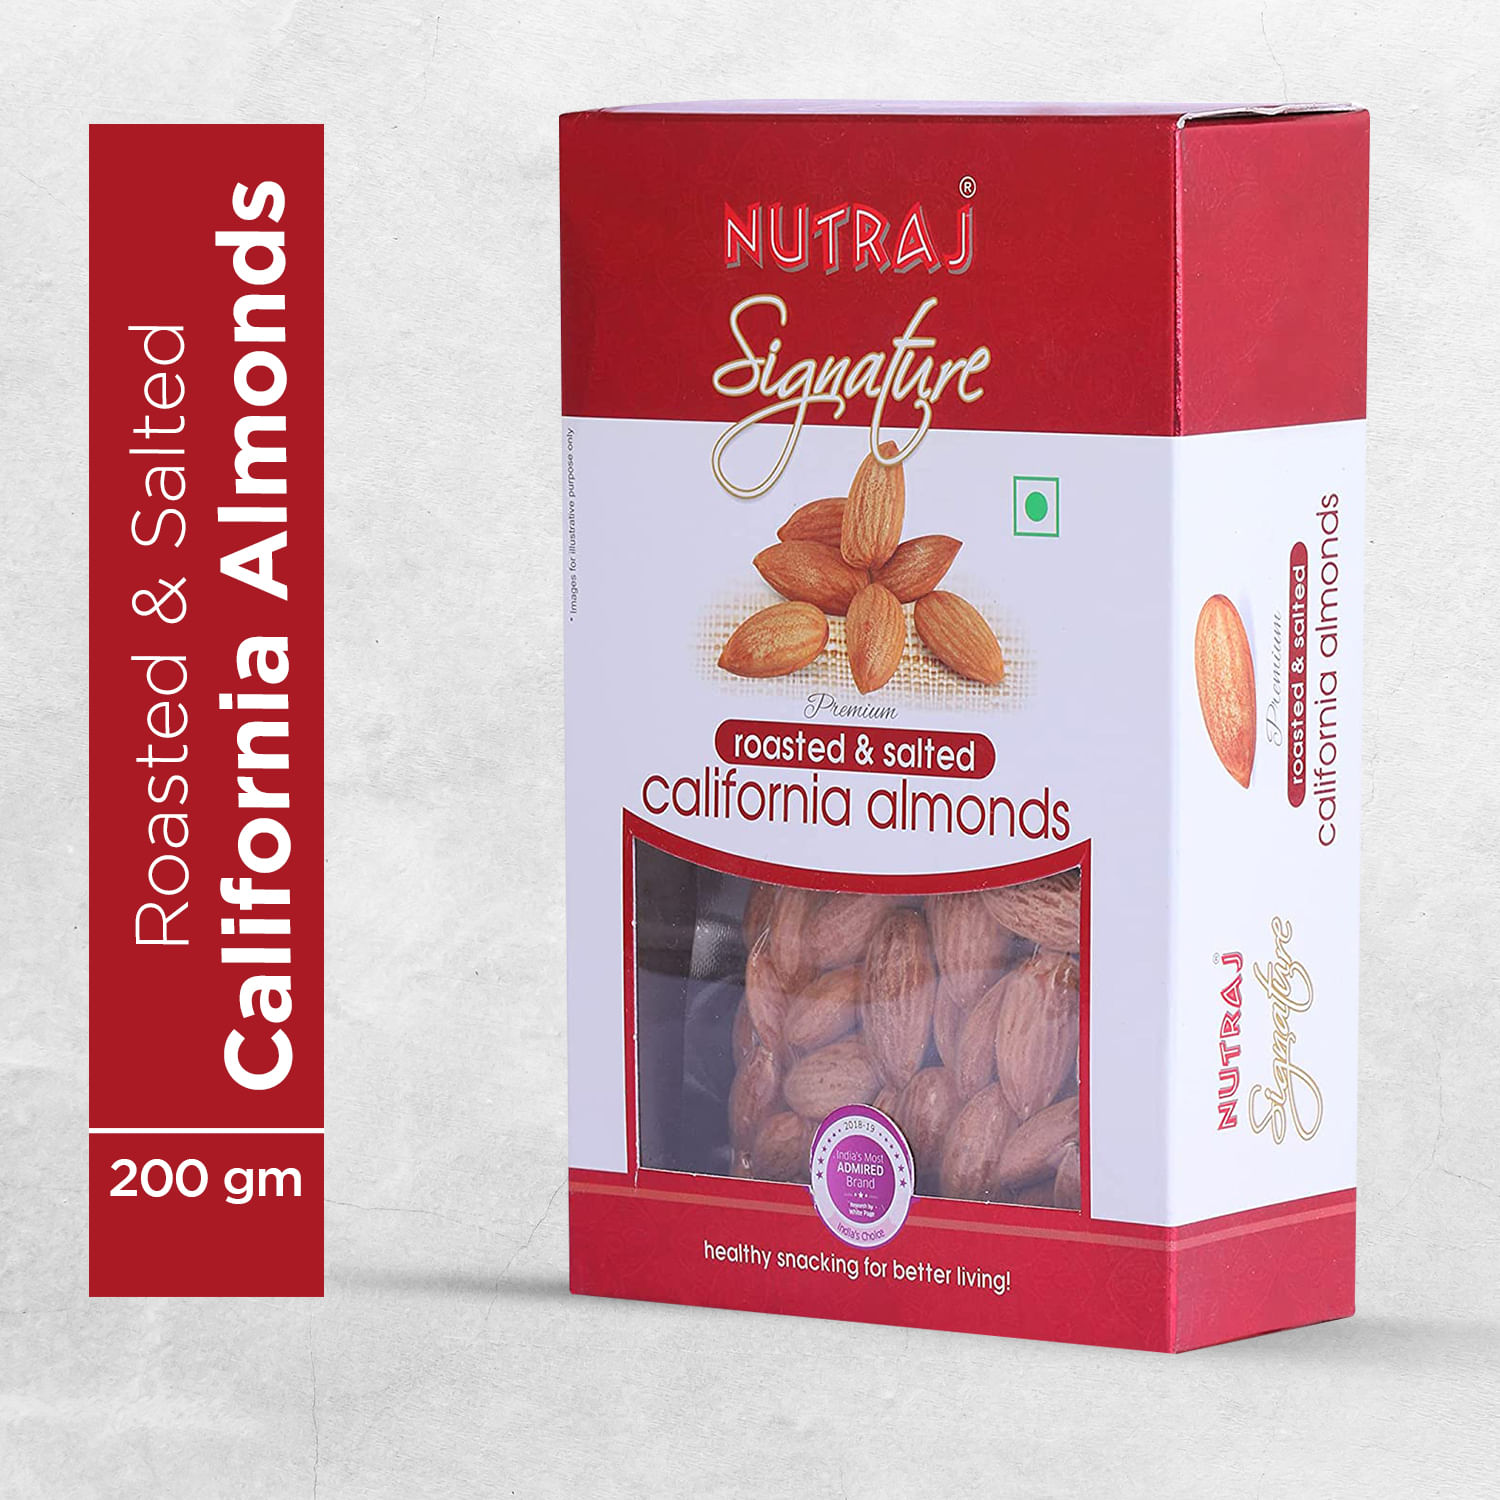 Nutraj Signature Roasted and Salted California Almonds 200g - Vacuum Pack